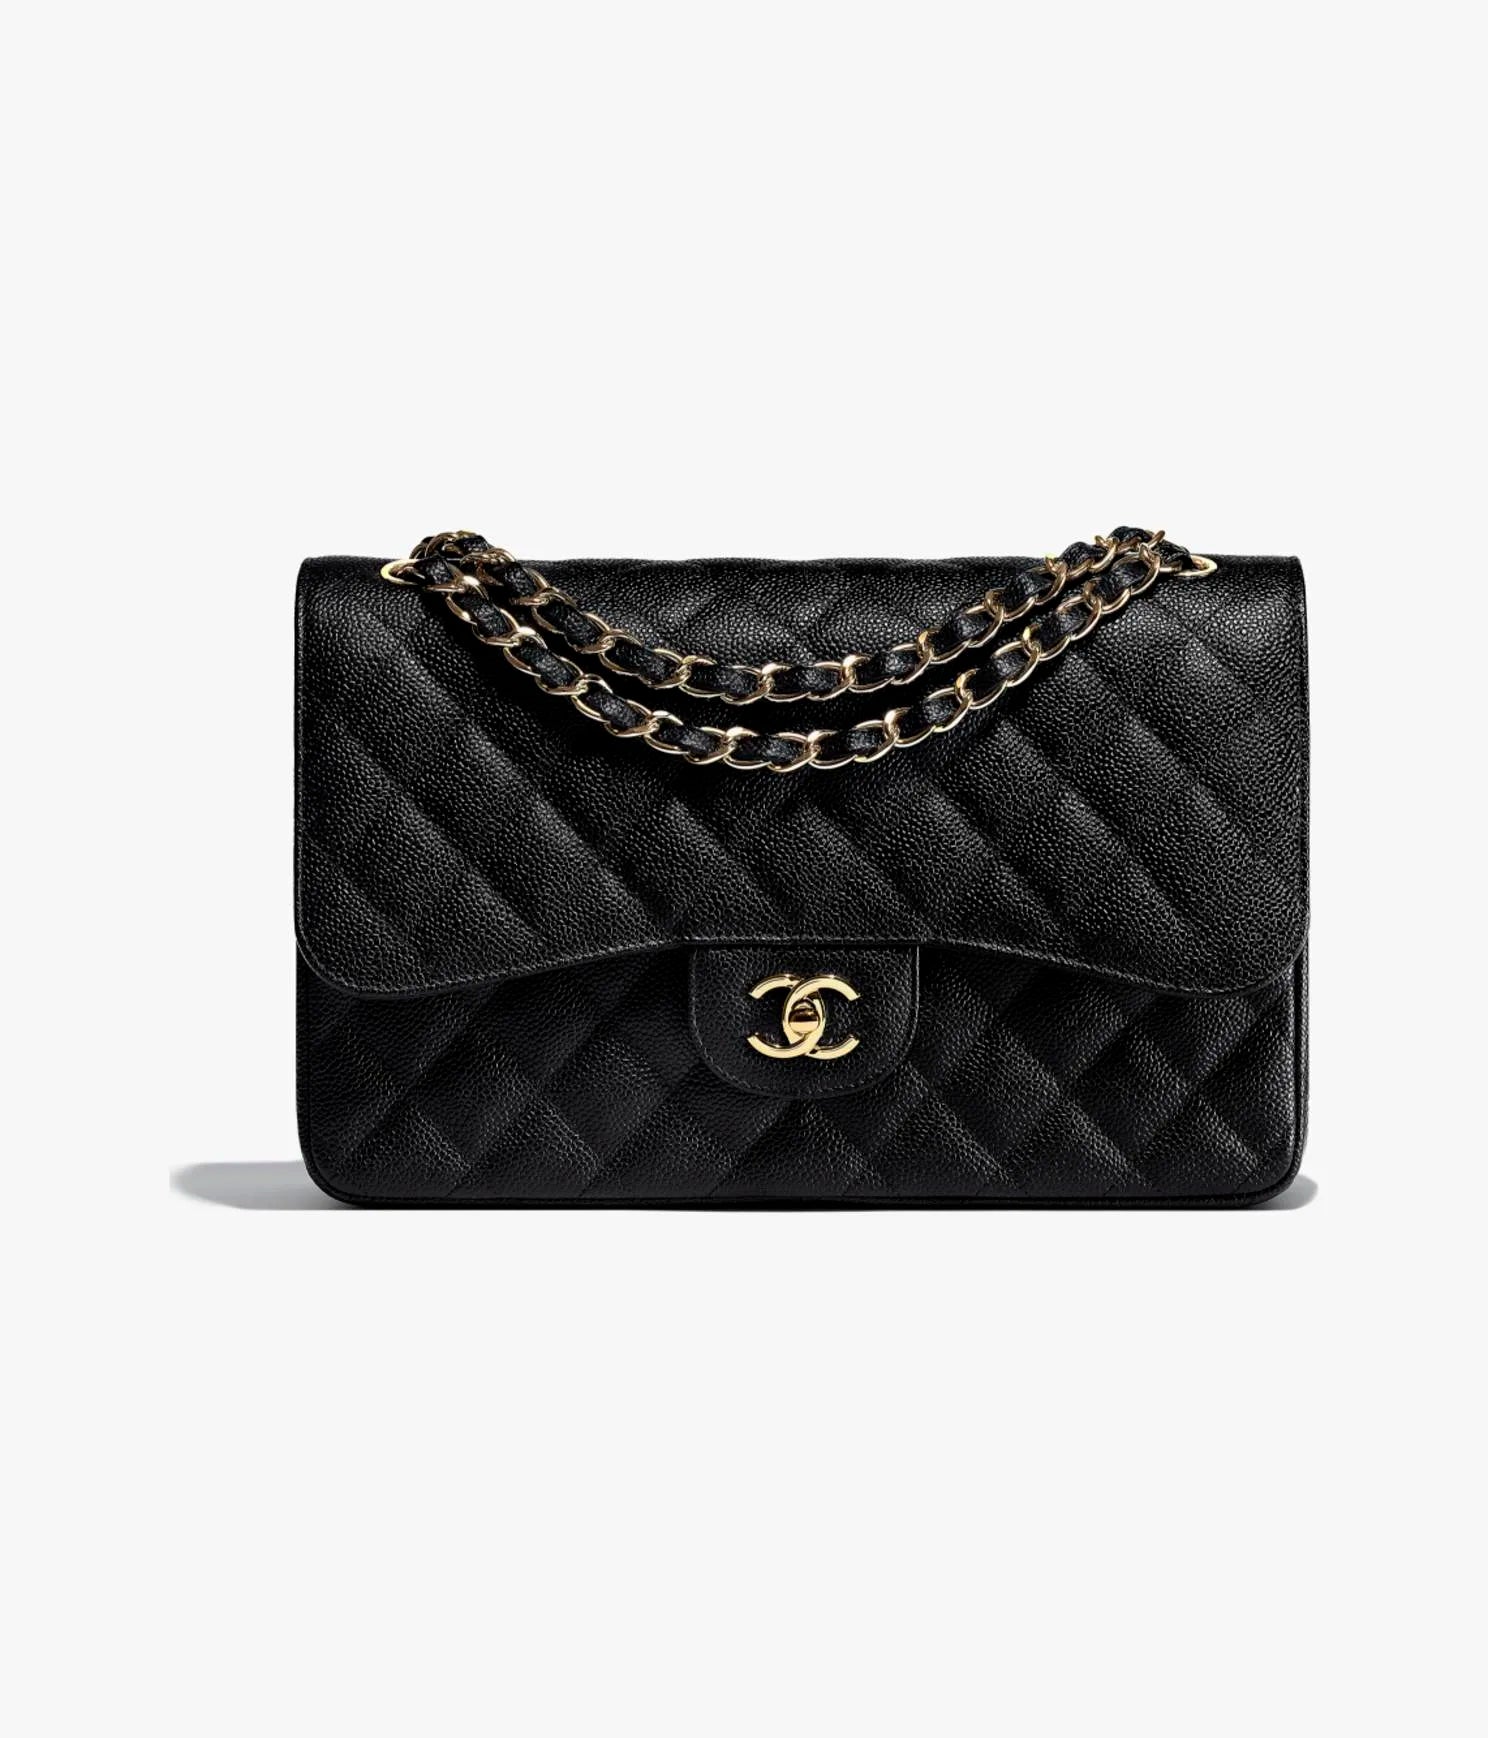 Chanel Large Classic Handbag